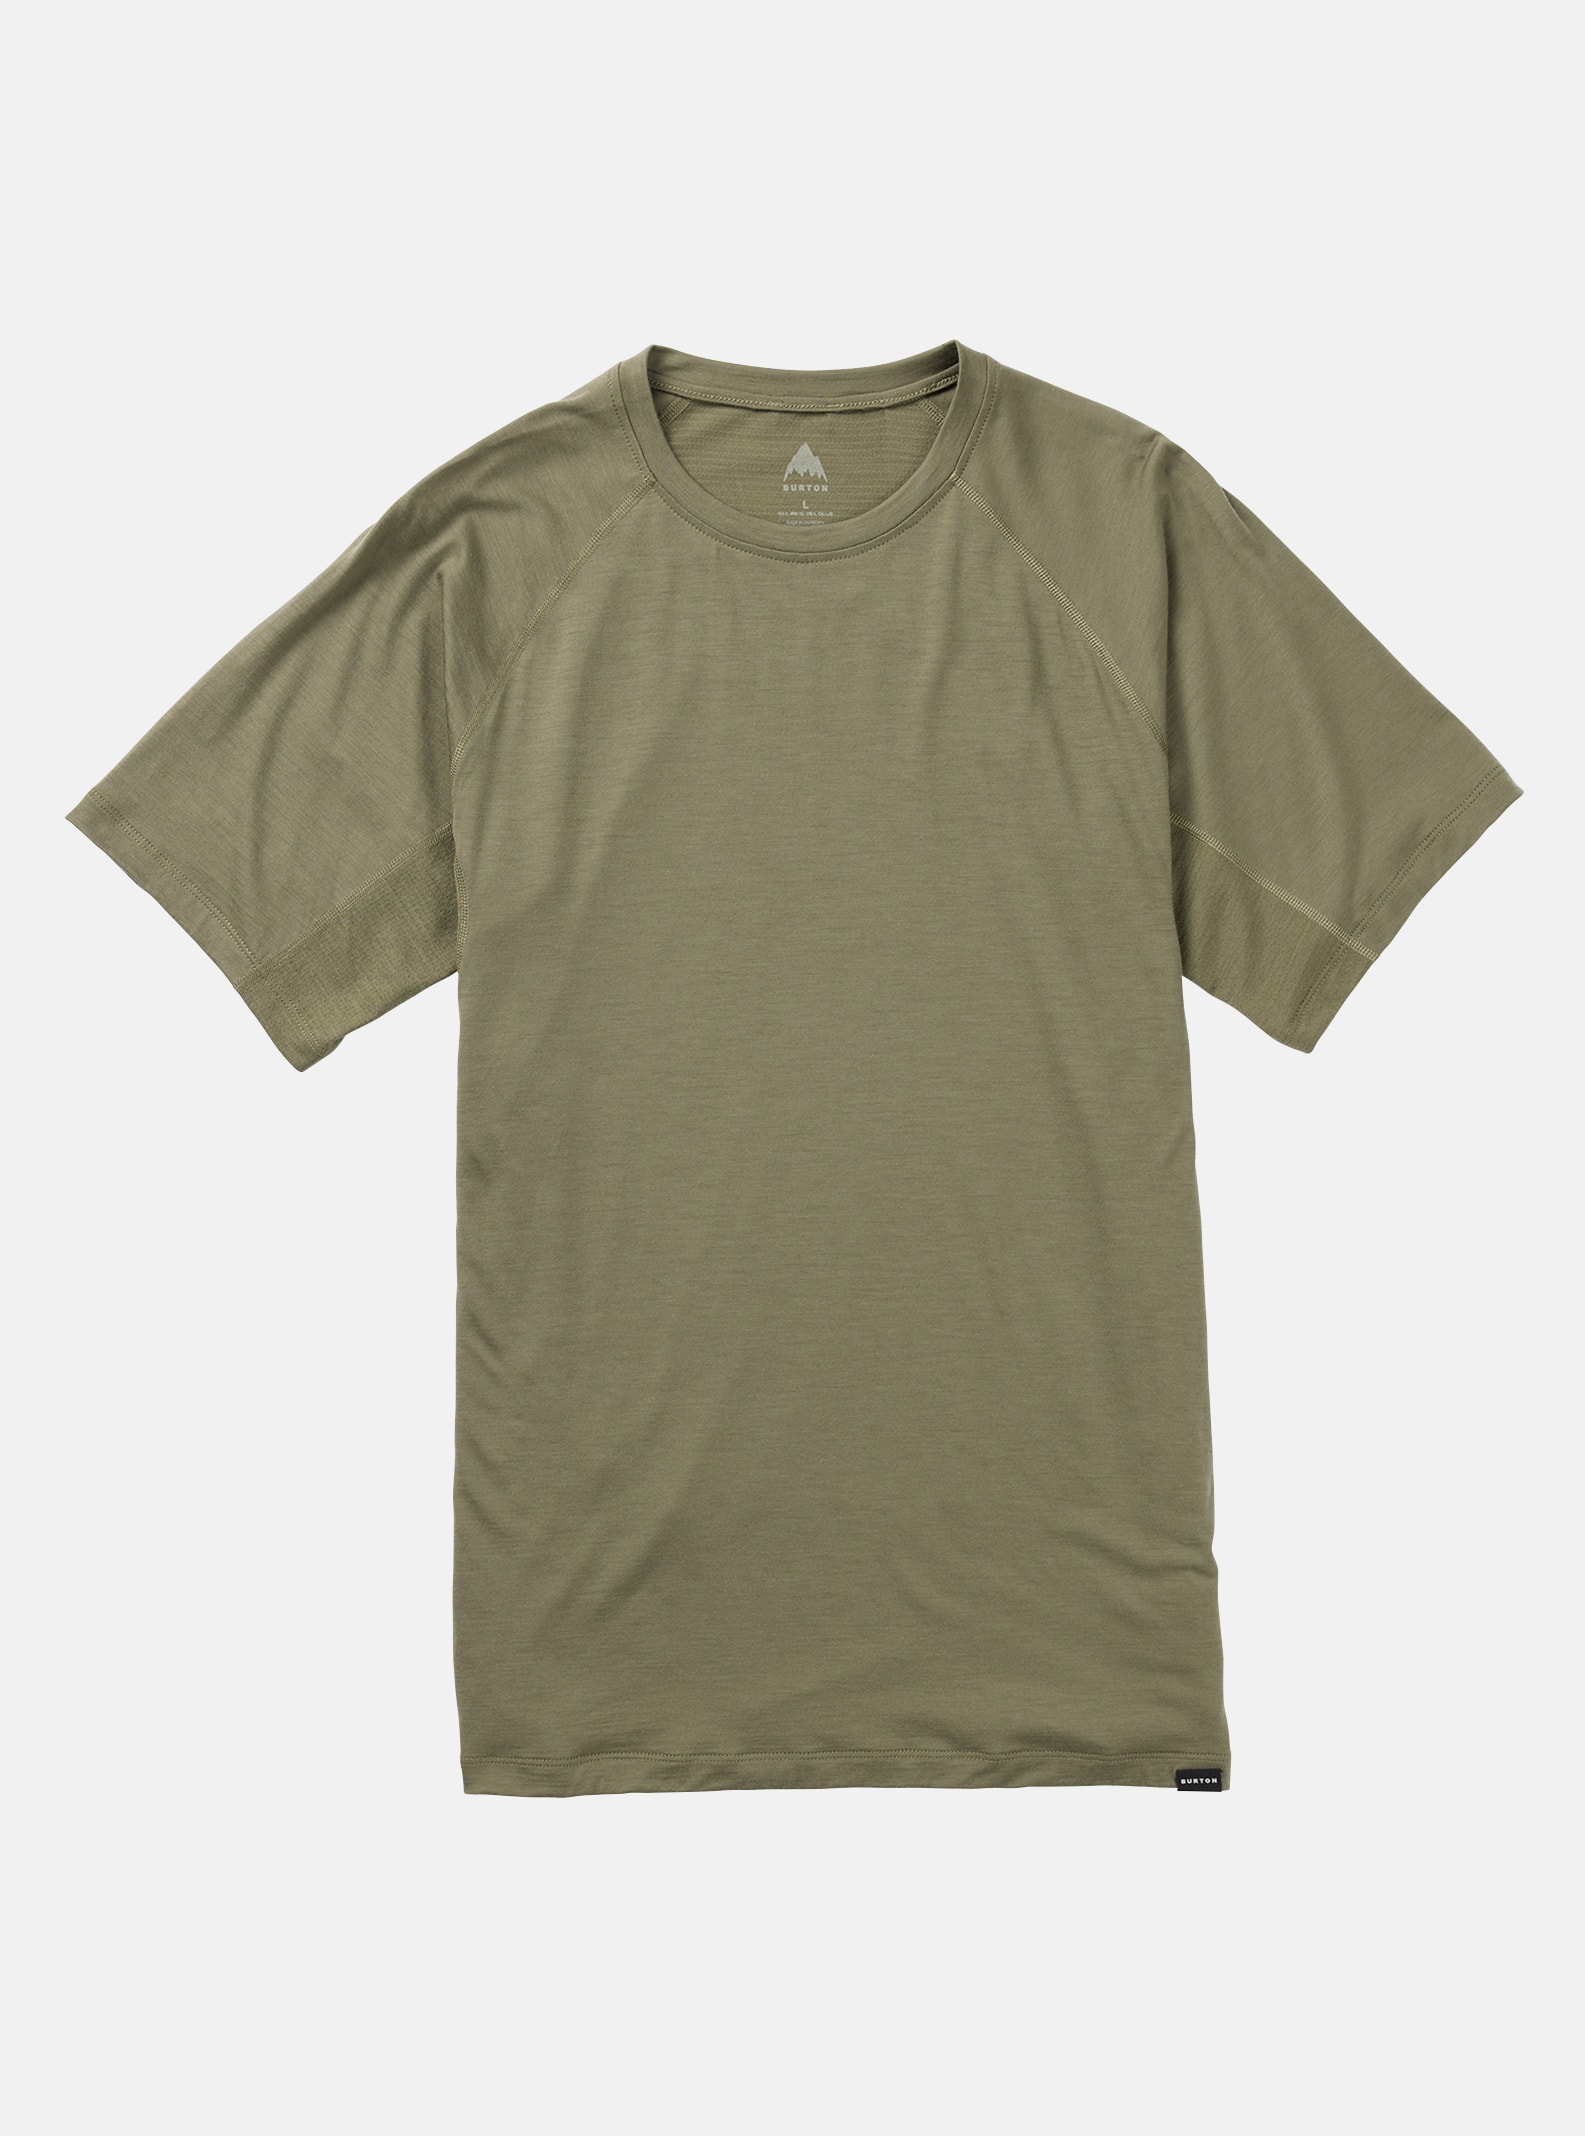 Burton Men's Phayse Merino T-Shirt, Forest Moss, M